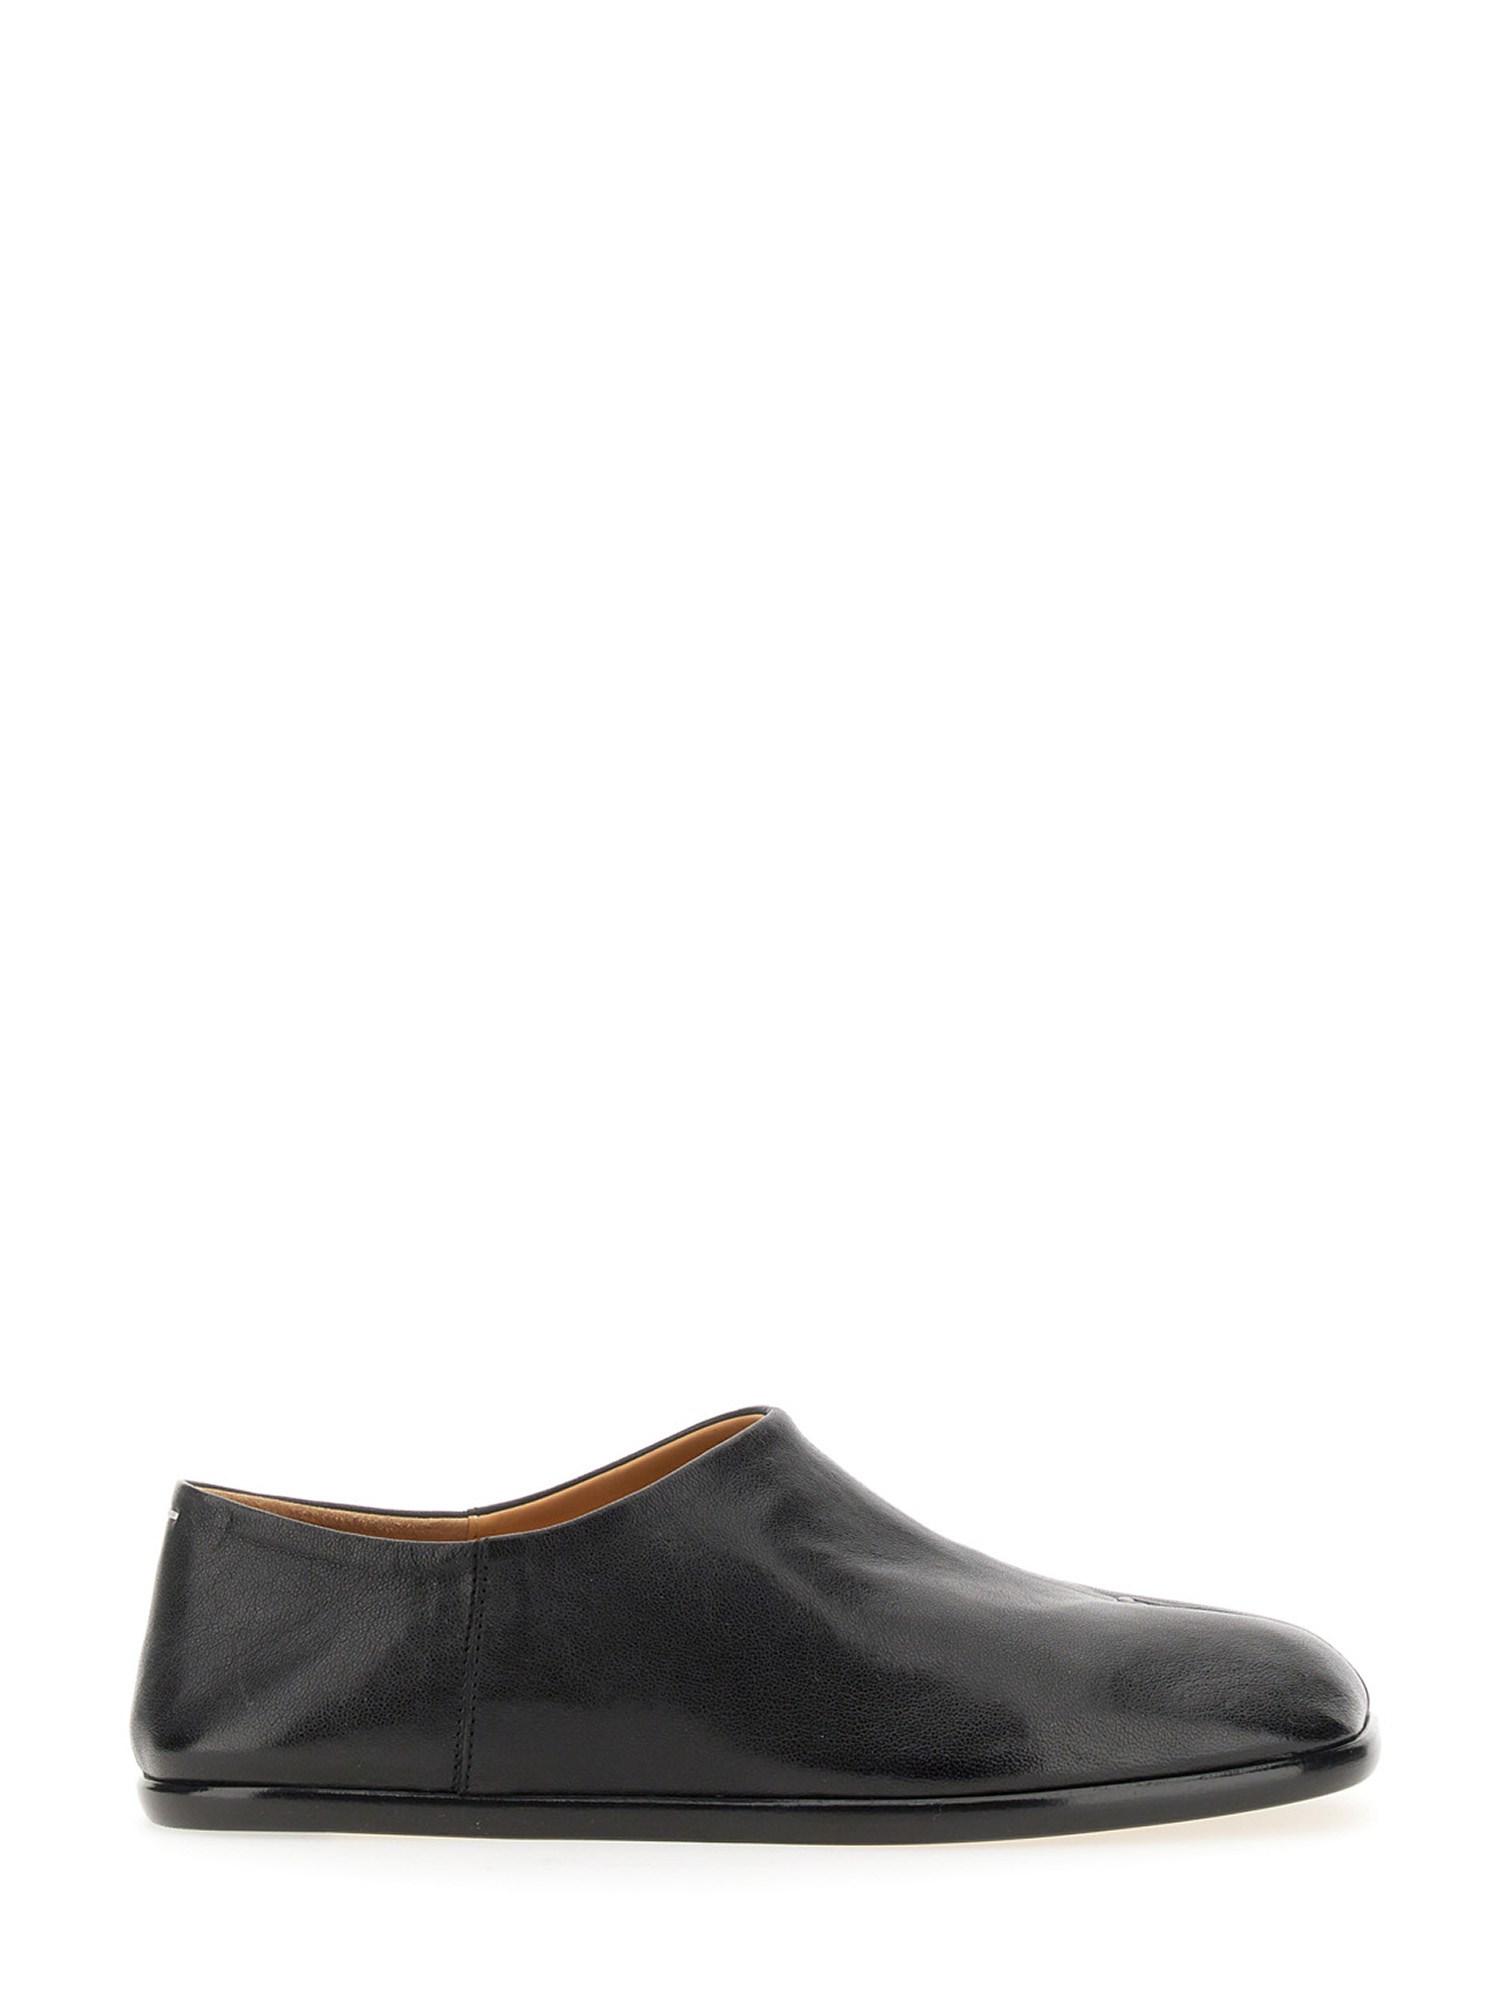 Maison Margiela Tabi Leather Slip-on Loafer | Lyst